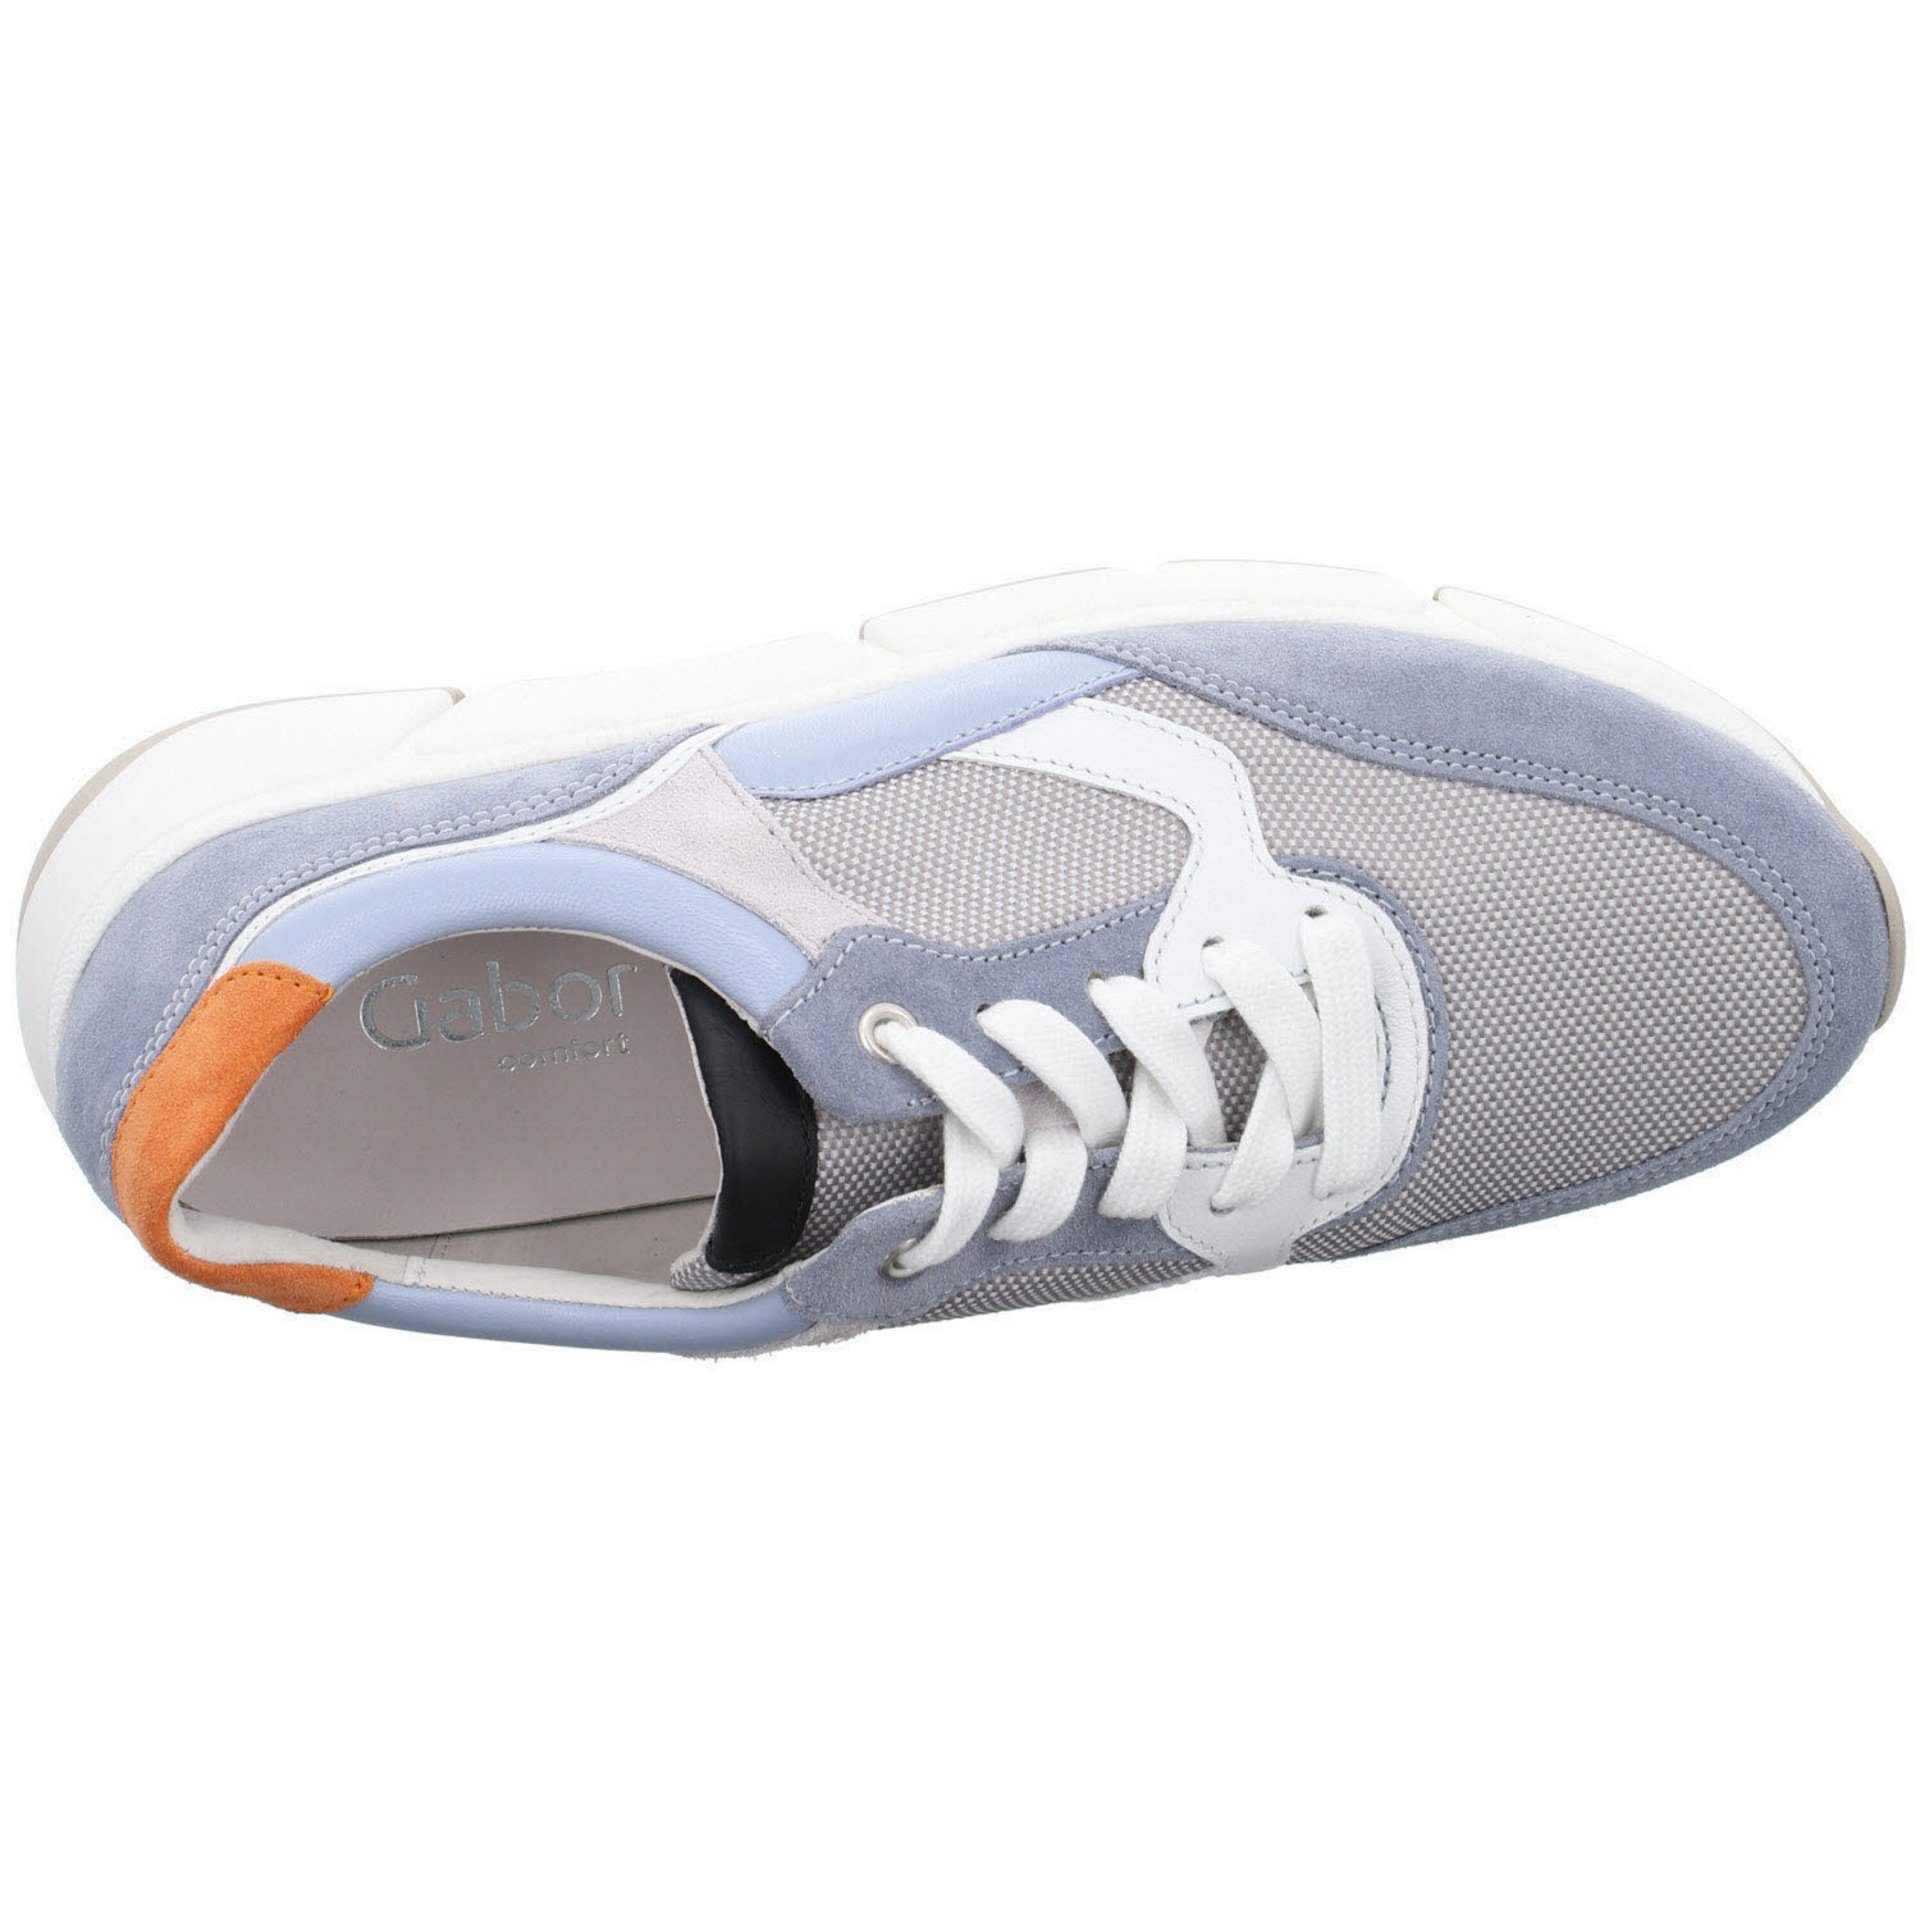 Gabor Damen Sneaker Leder-/Textilkombination Florenz cielo/grau/orange Schuhe Sneaker Sneaker